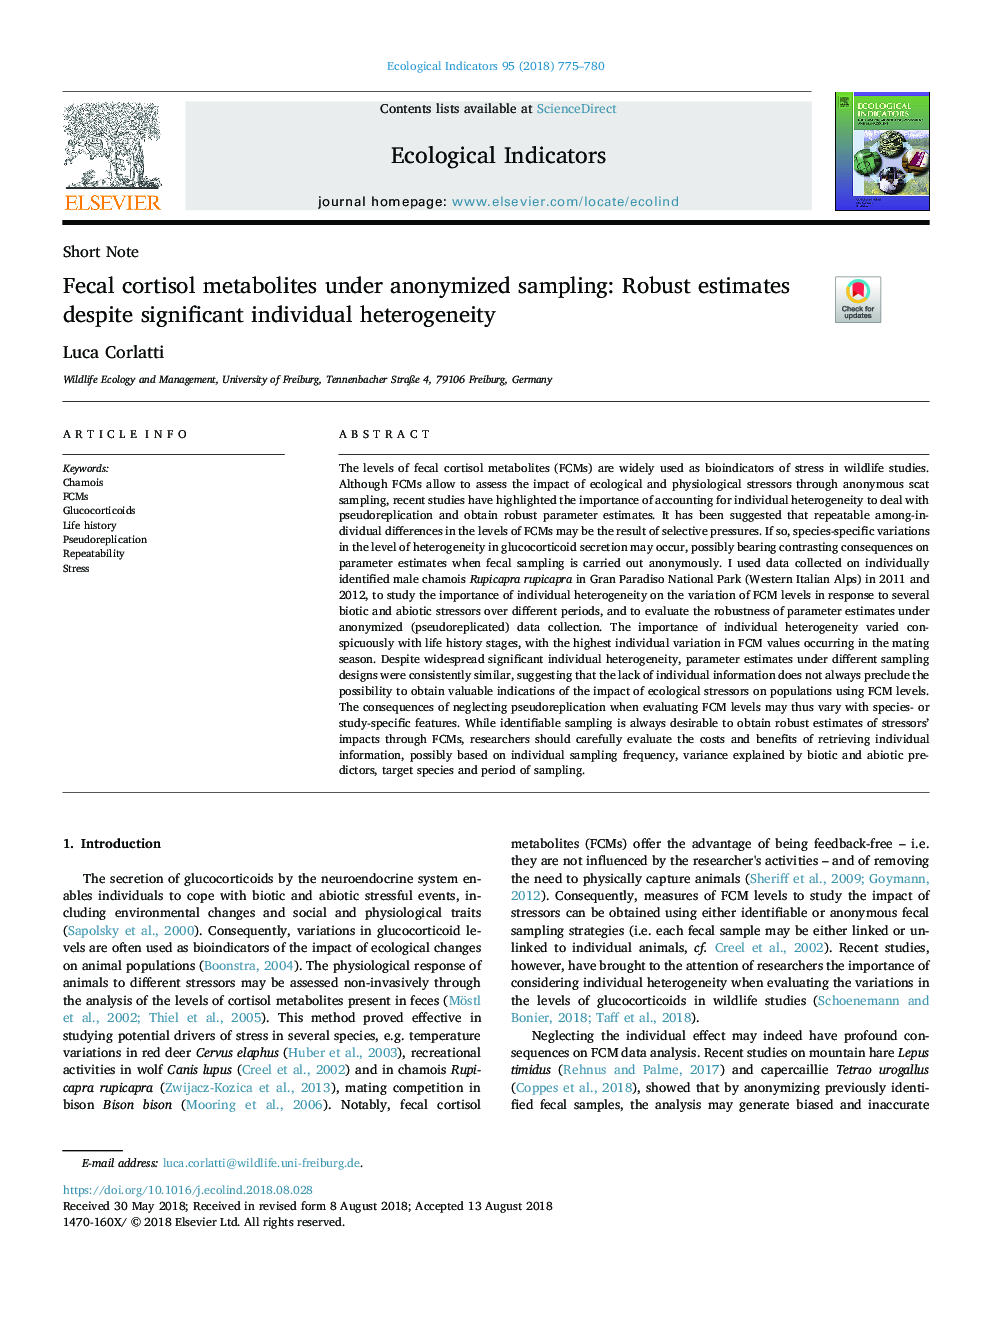 Fecal cortisol metabolites under anonymized sampling: Robust estimates despite significant individual heterogeneity